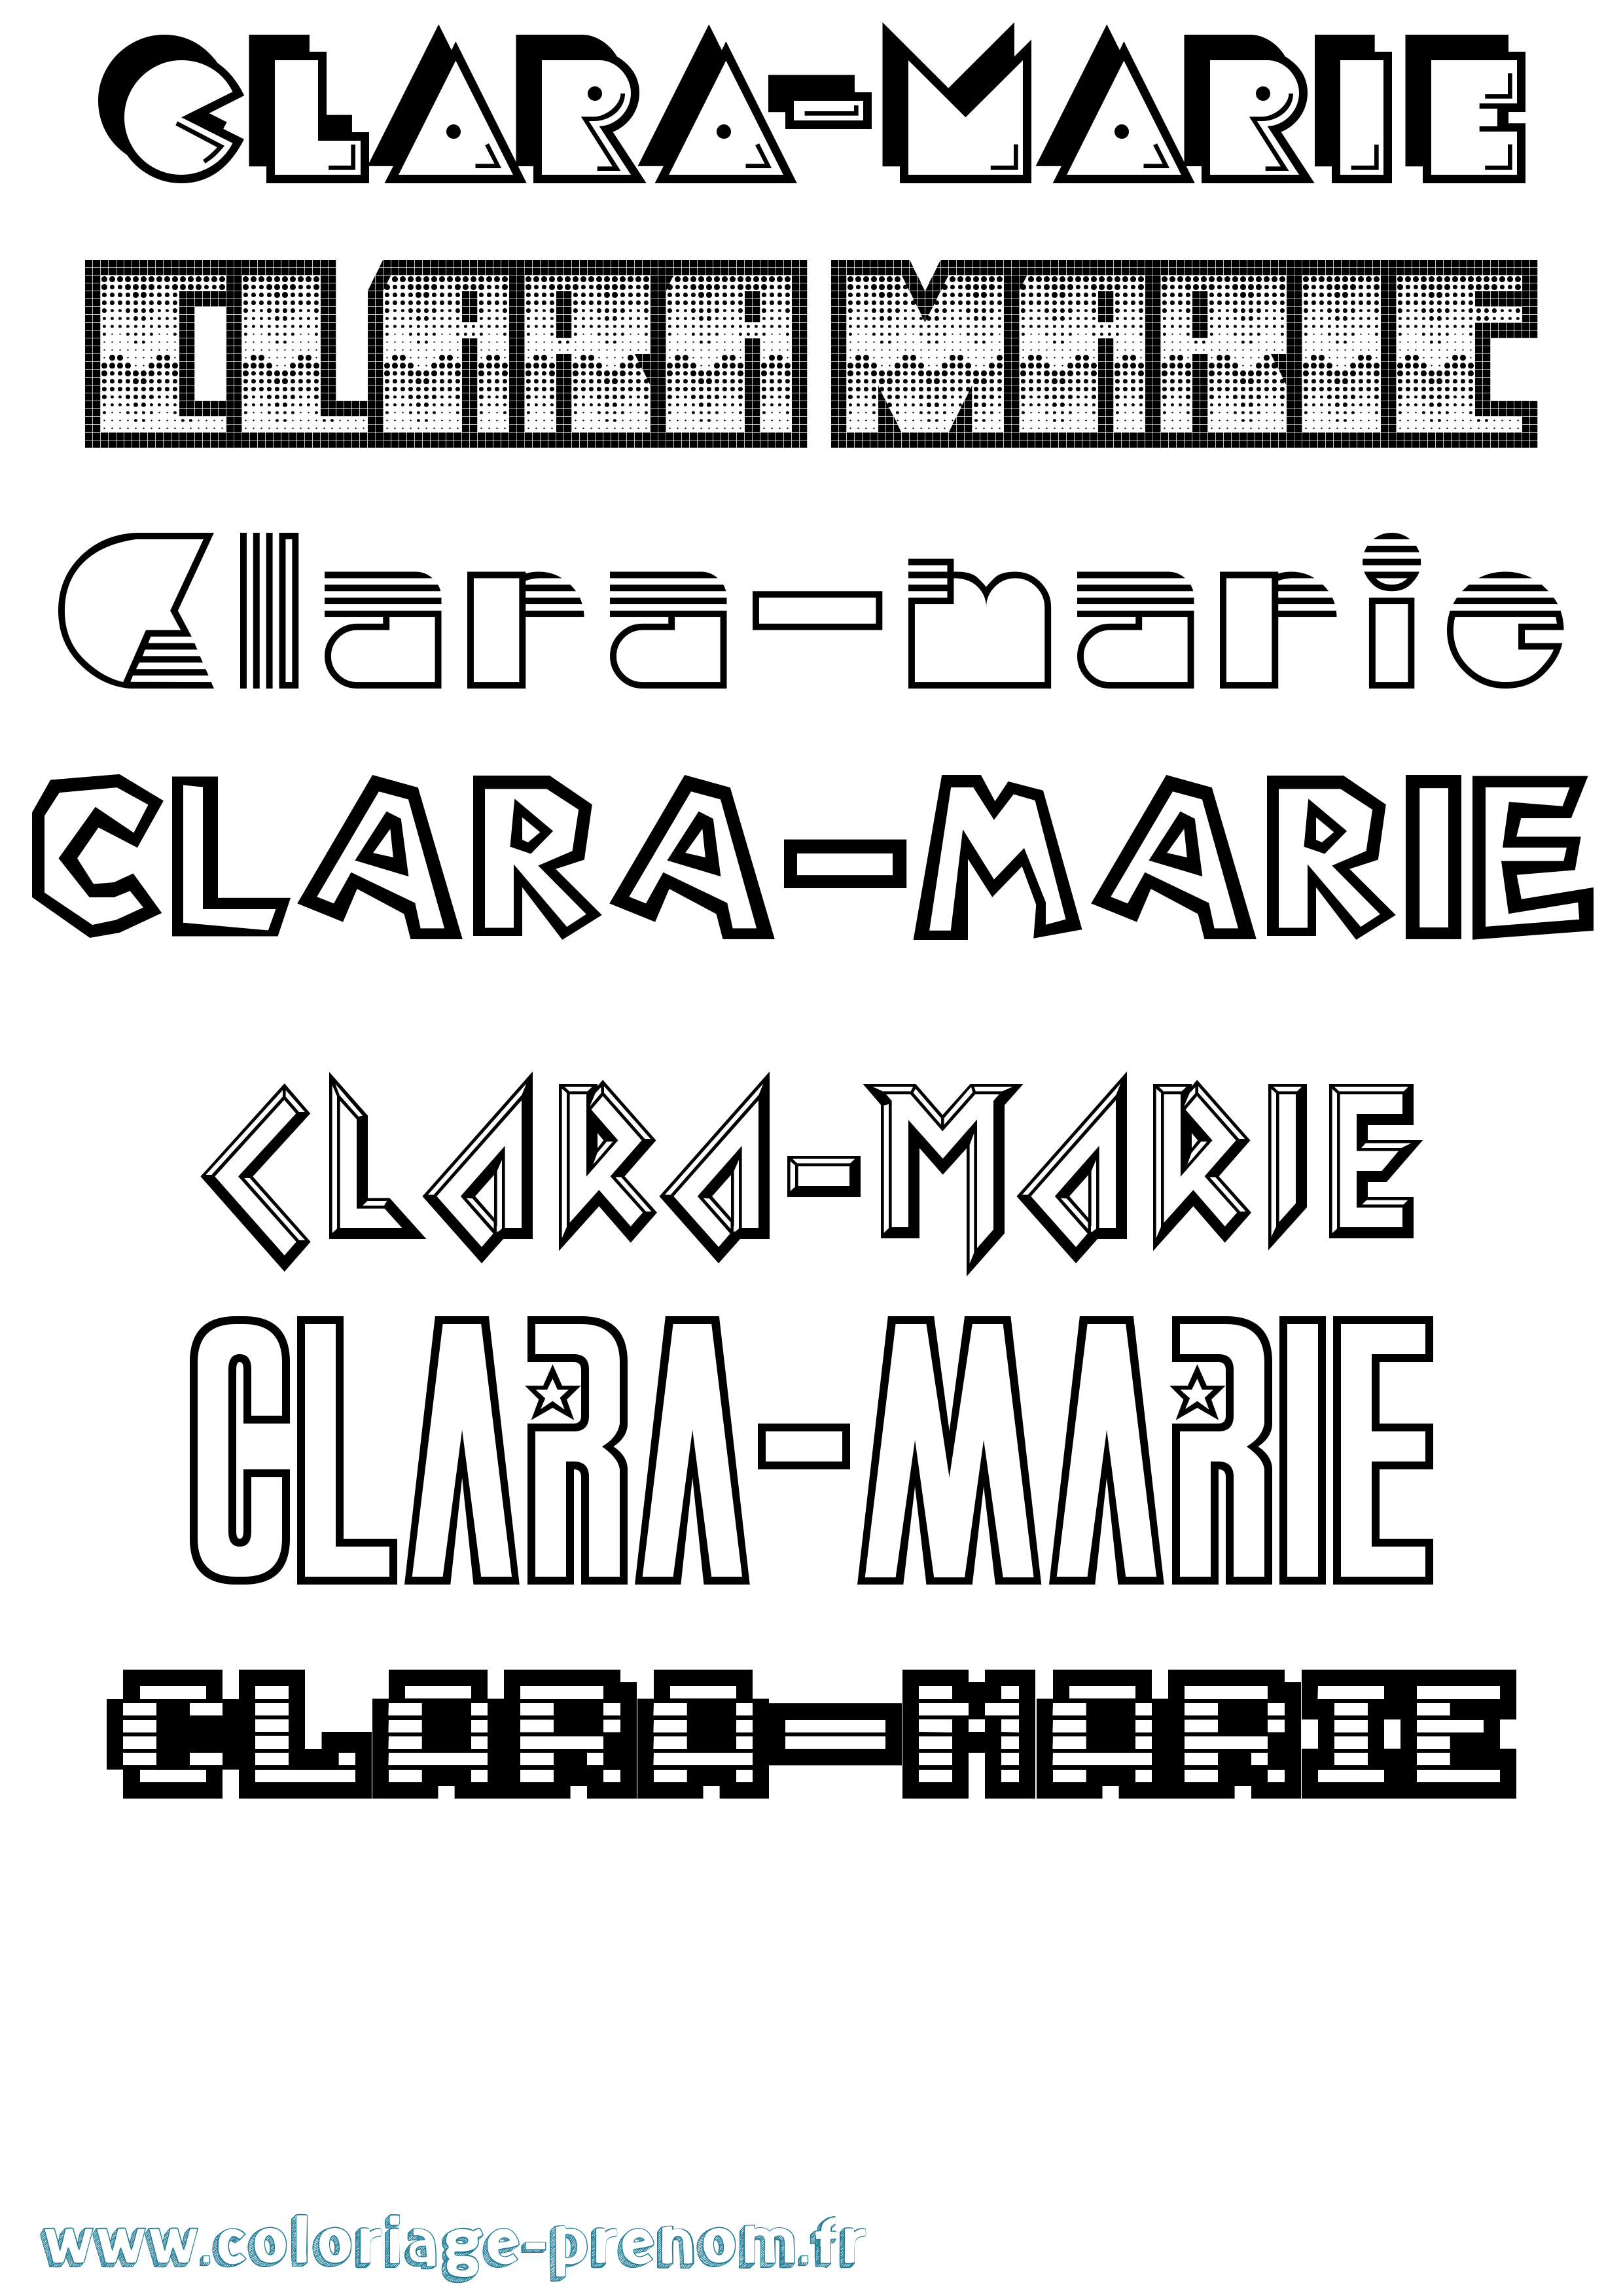 Coloriage prénom Clara-Marie Jeux Vidéos